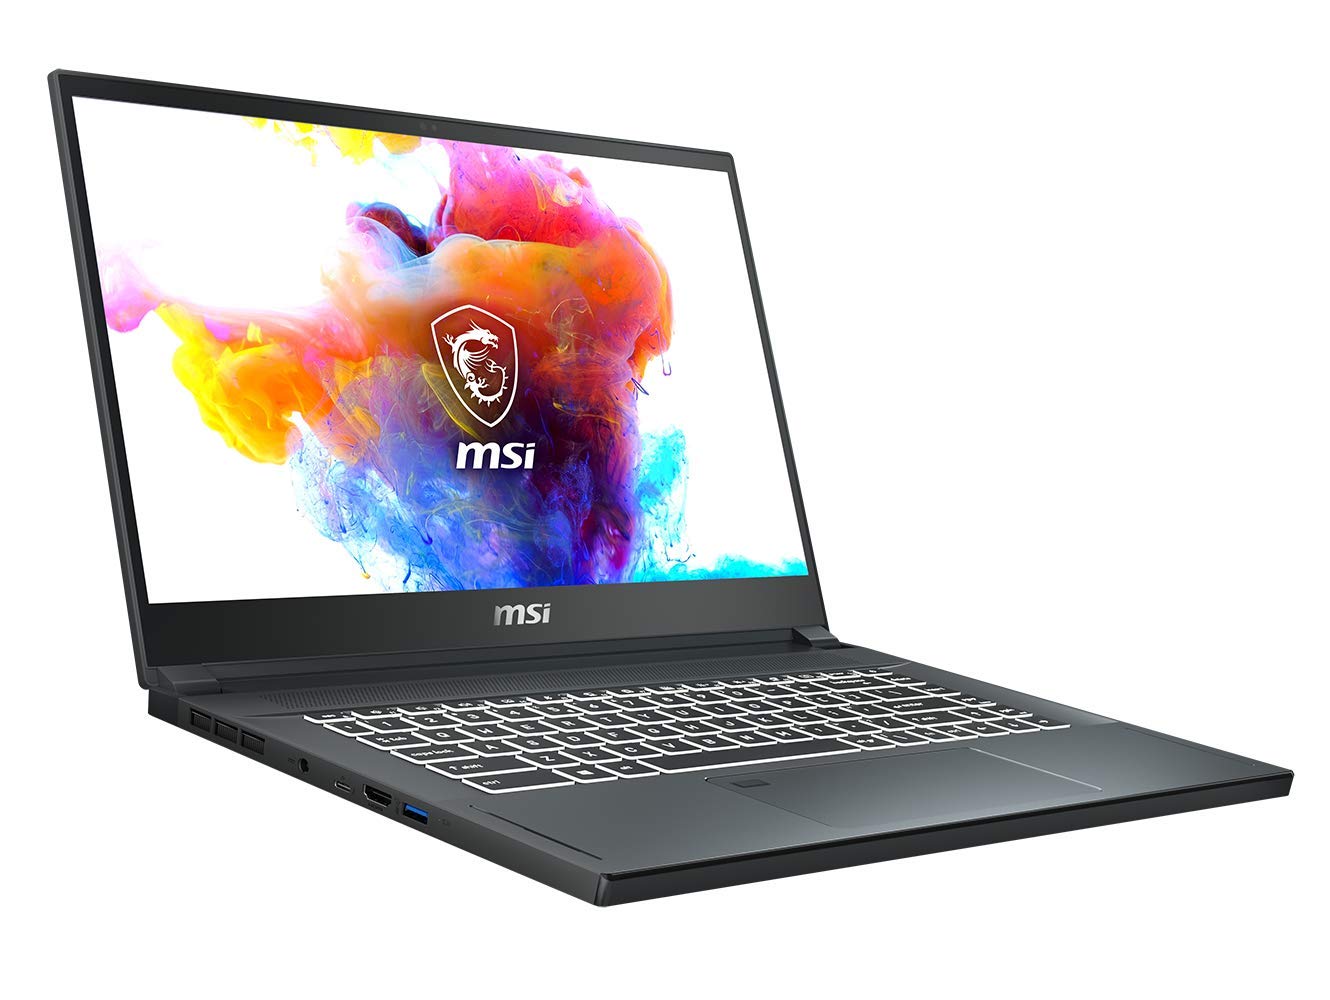 MSI Creator 15 A10SD-015 Gaming and Entertainment Laptop (Intel i7-10750H 6-Core, 32GB RAM, 2TB m.2 SATA SSD, GTX 1660 Ti, 15.6